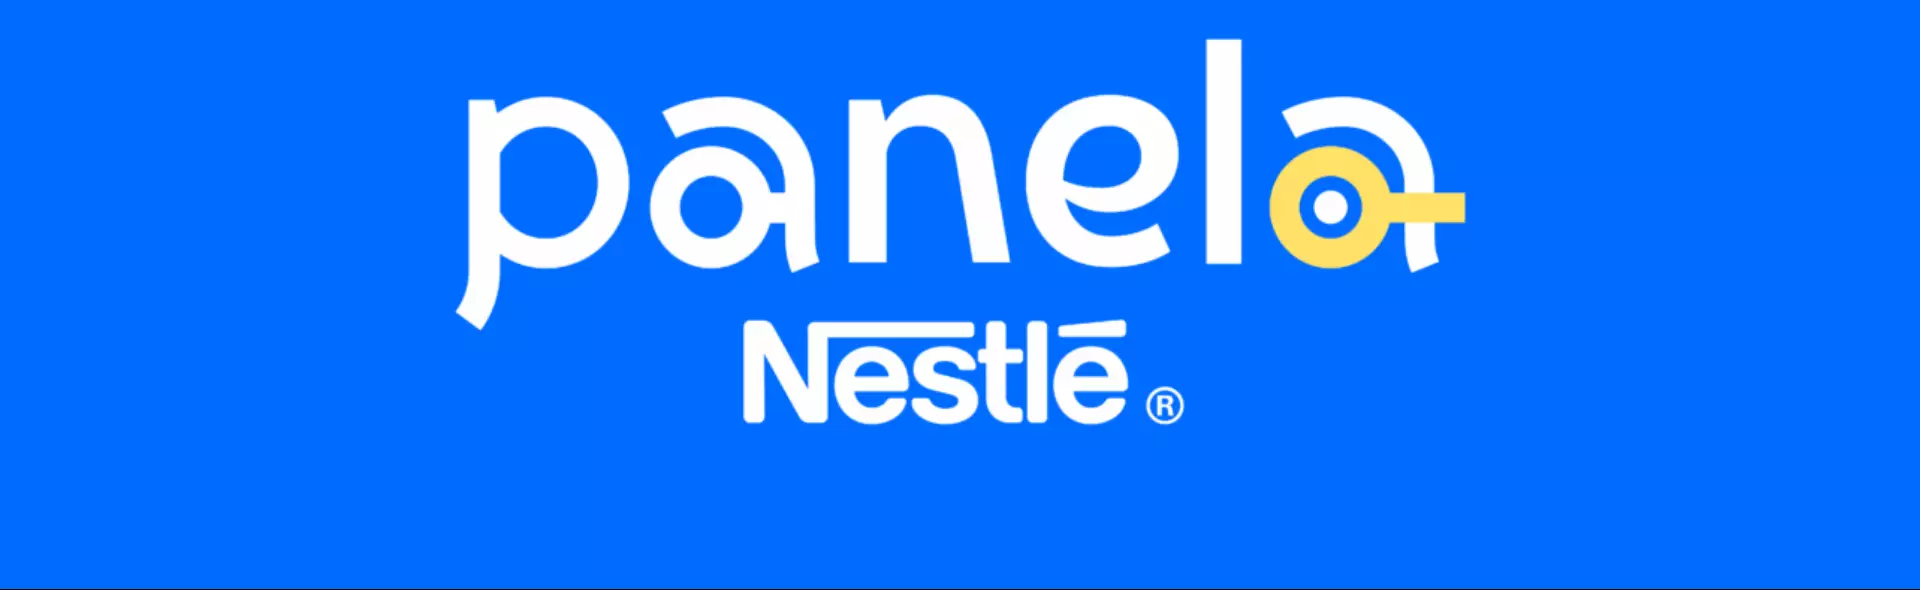 2020 - Panela Nestlé